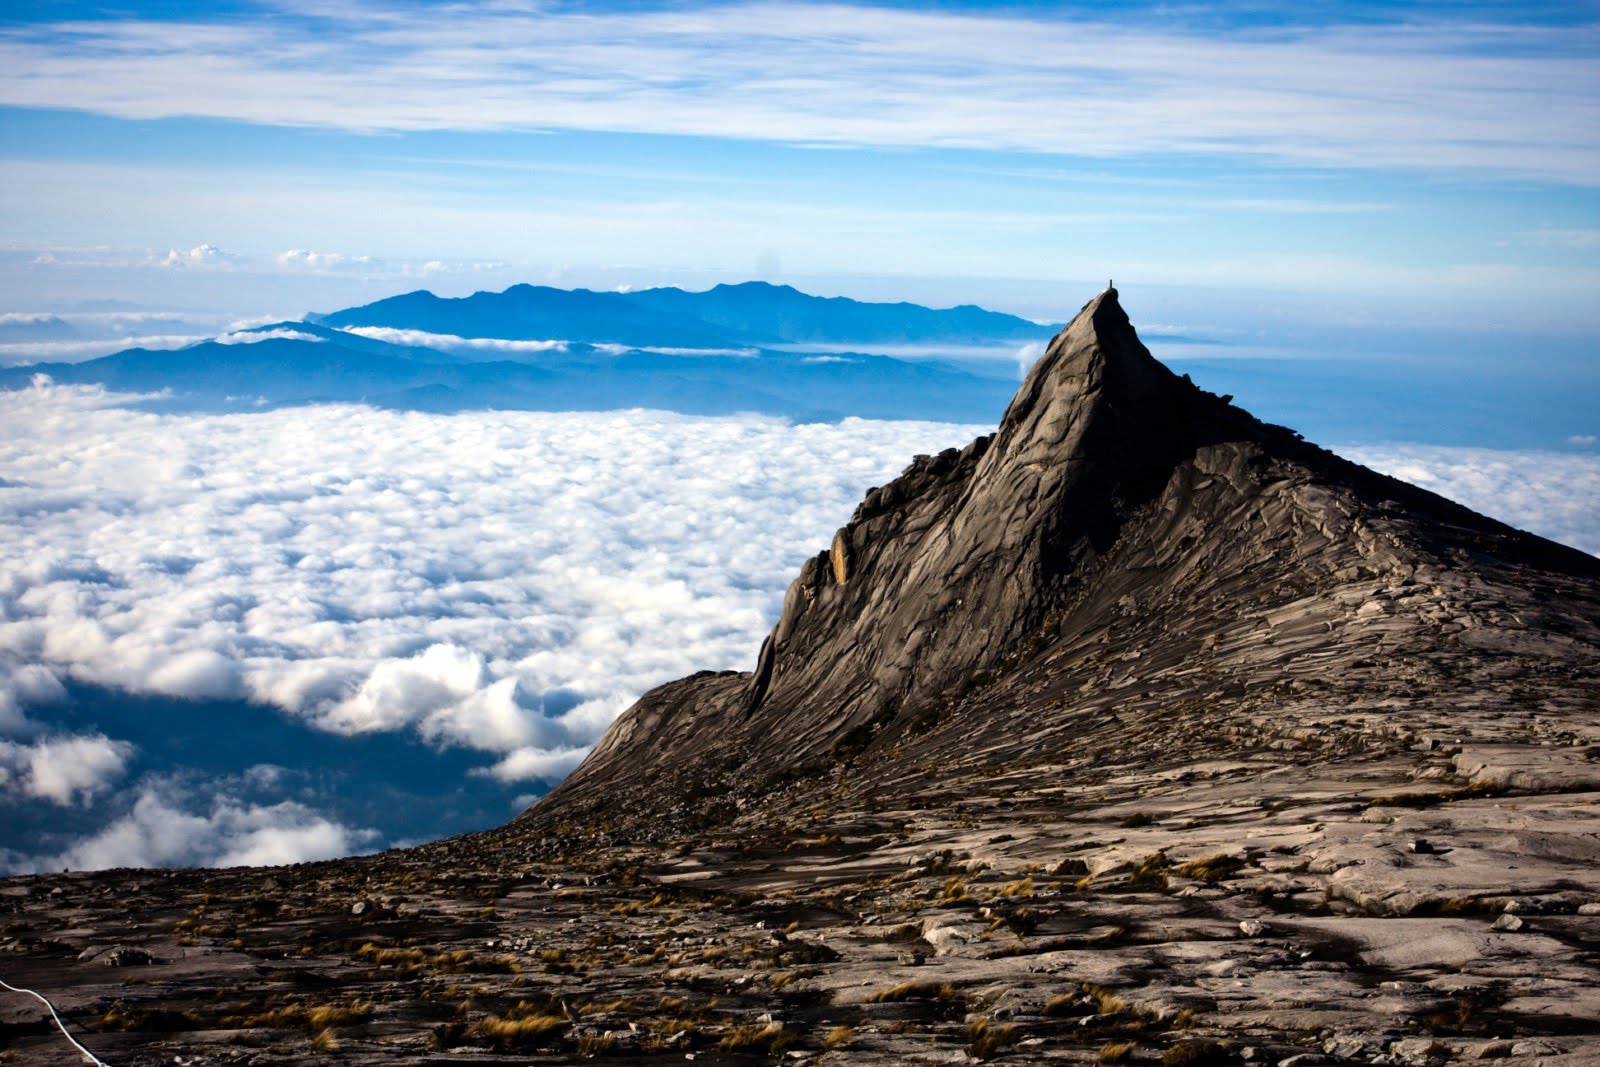 Amazing Malaysia: Climbing Mount Kinabalu. "A Guide To A Climb of A